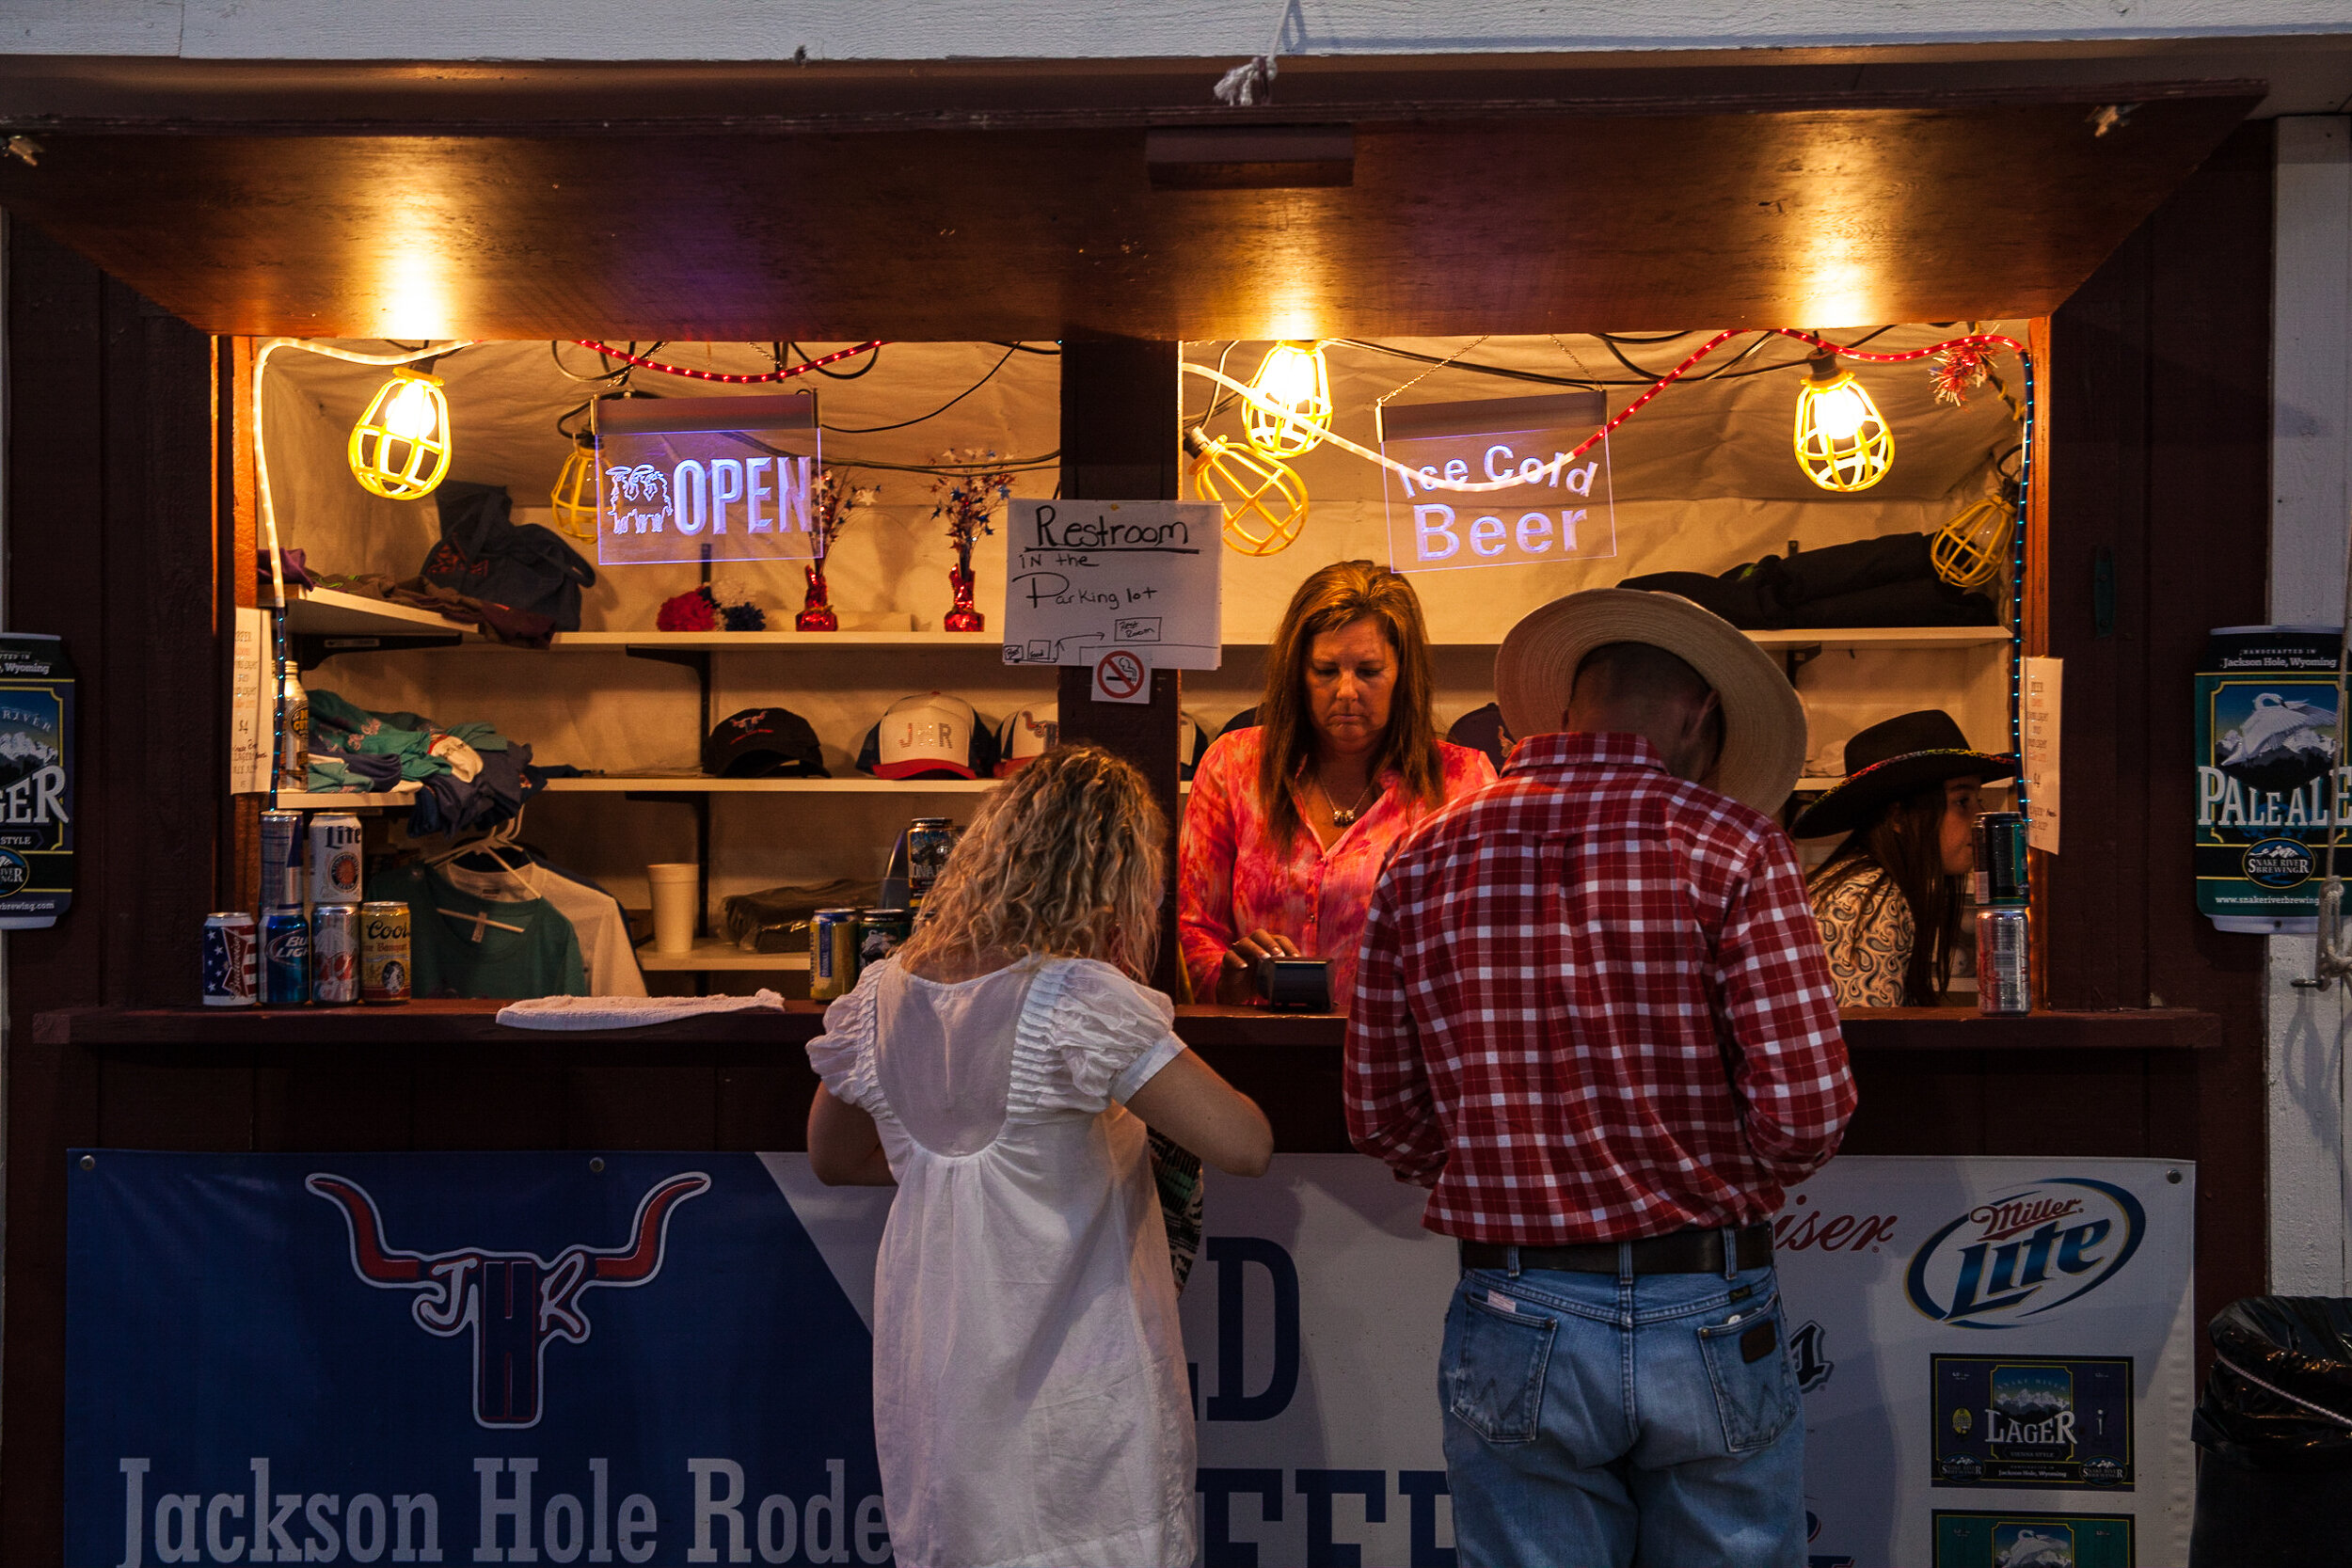  19 July 2014, Jackson Hole, Wyoming, USA. Rodeo night. 